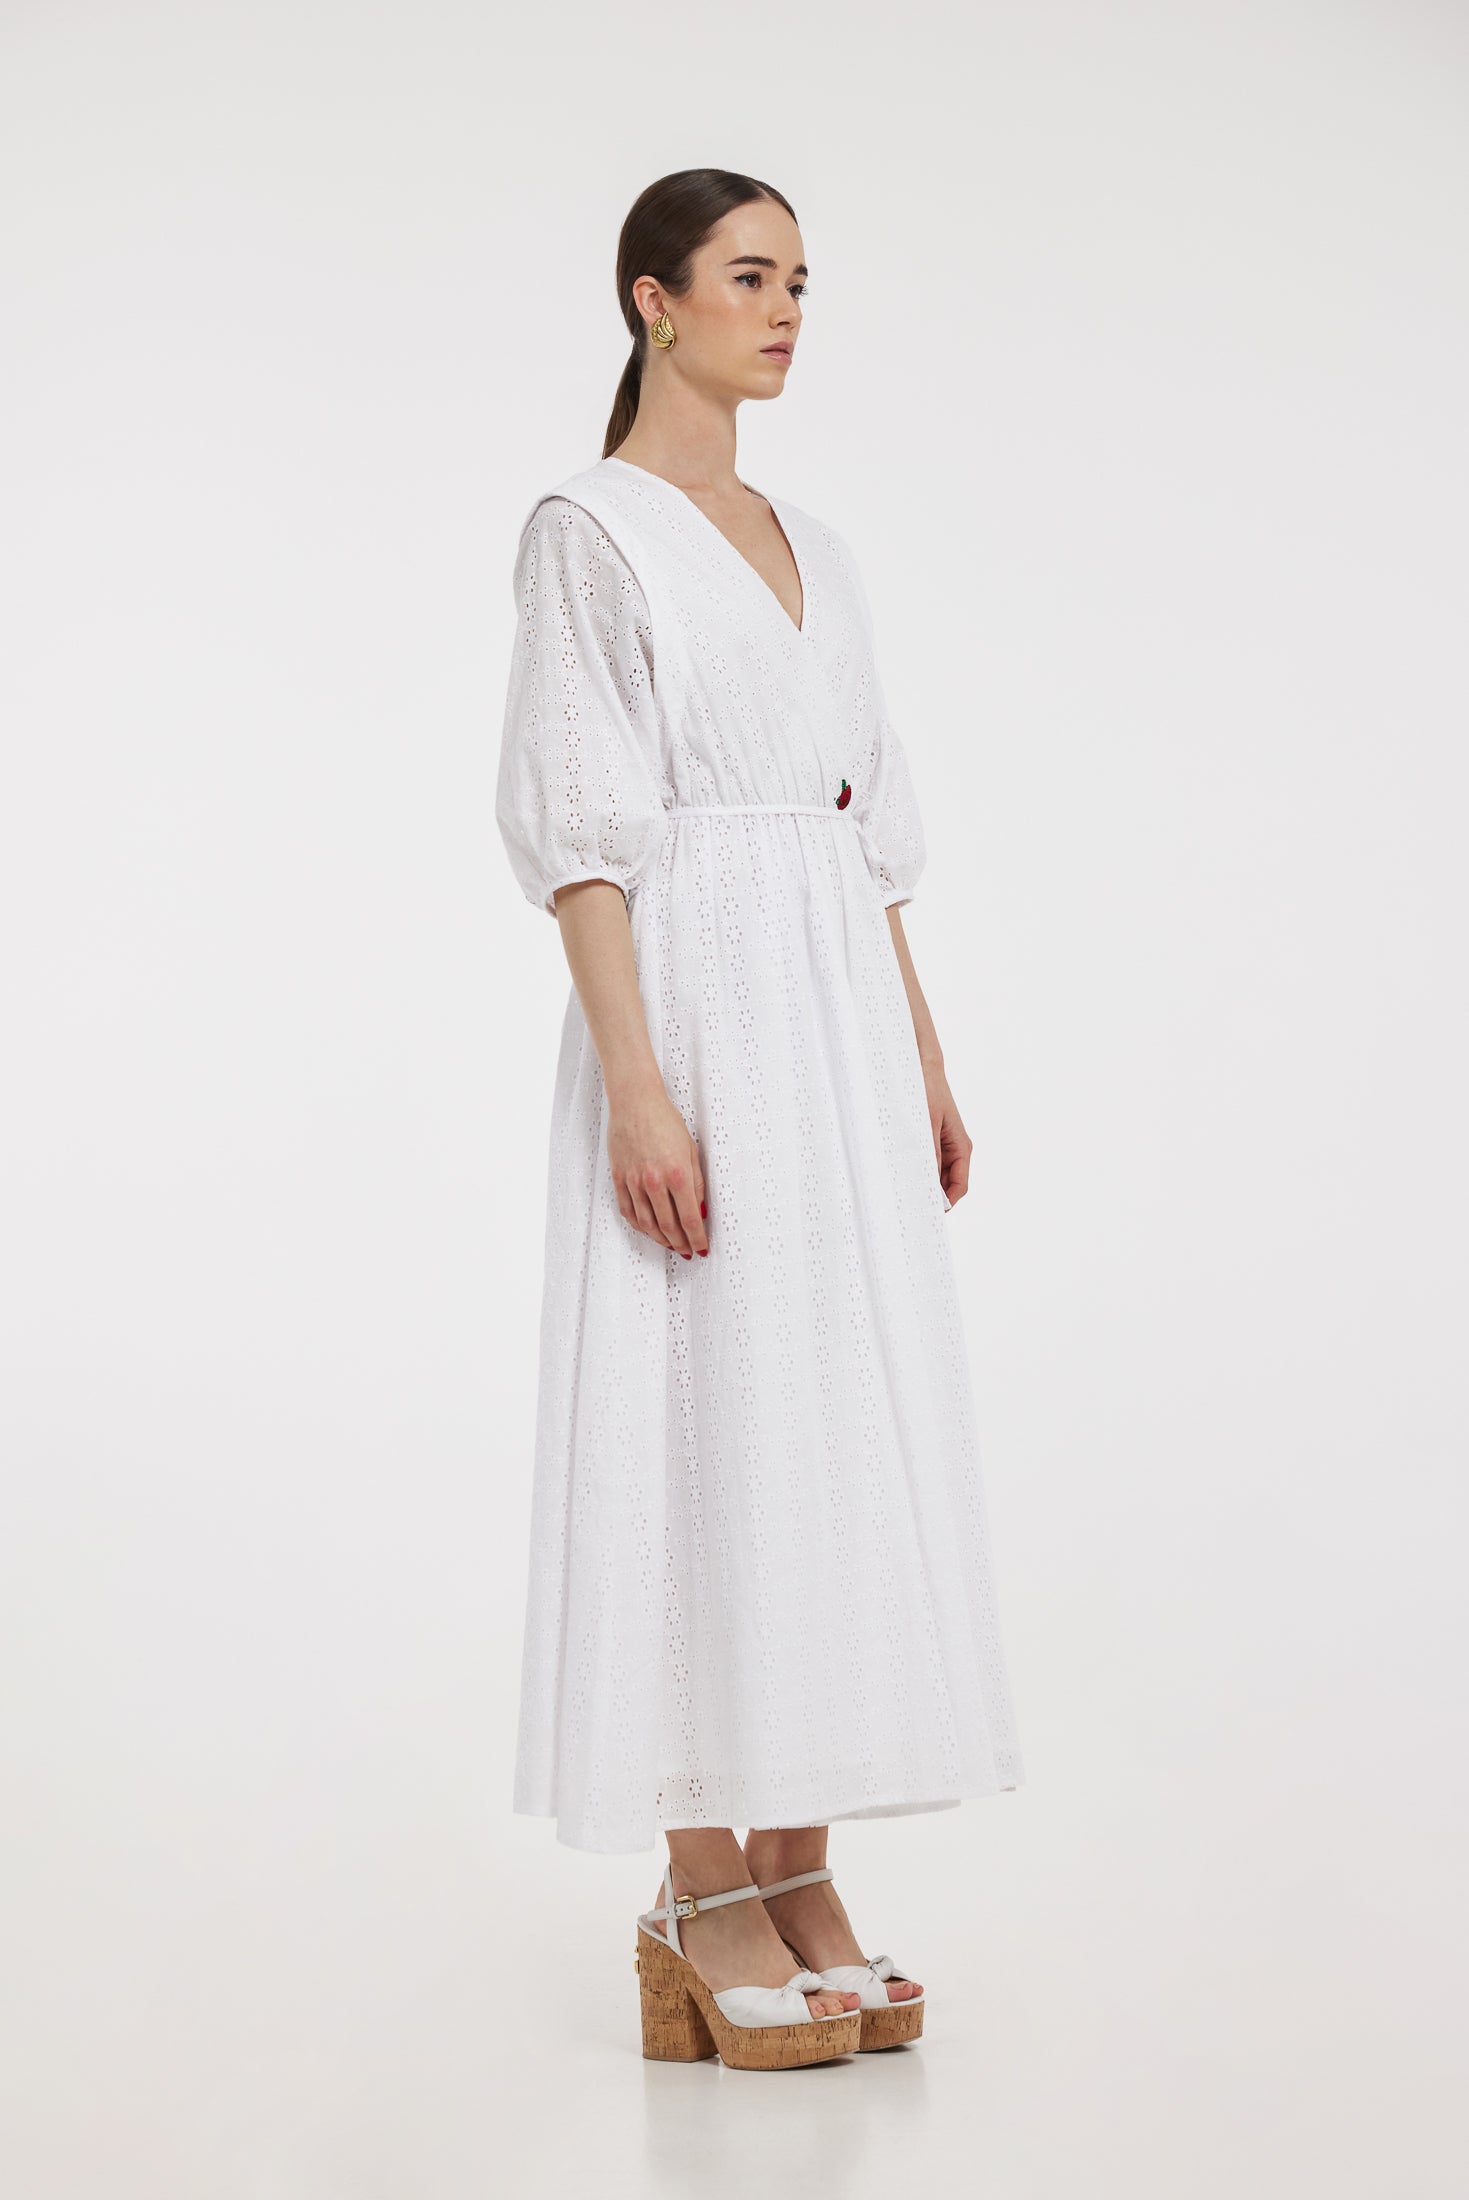 Lorenne Dress (White Lace)